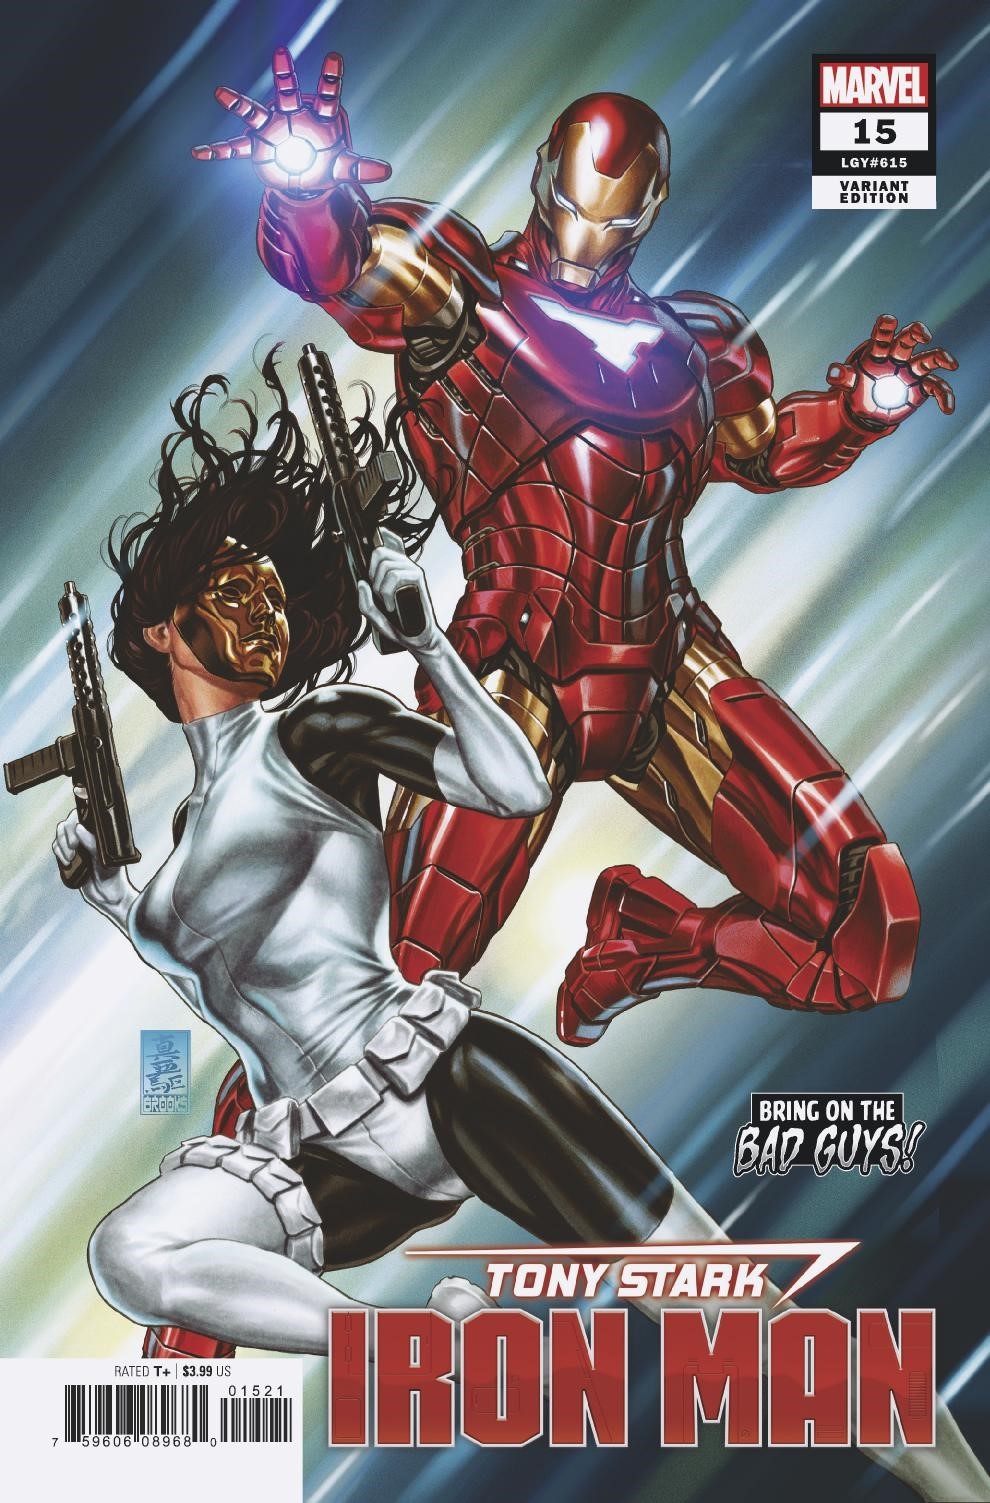 Tony Stark: Iron Man Vol 1 15 | Marvel Database | Fandom